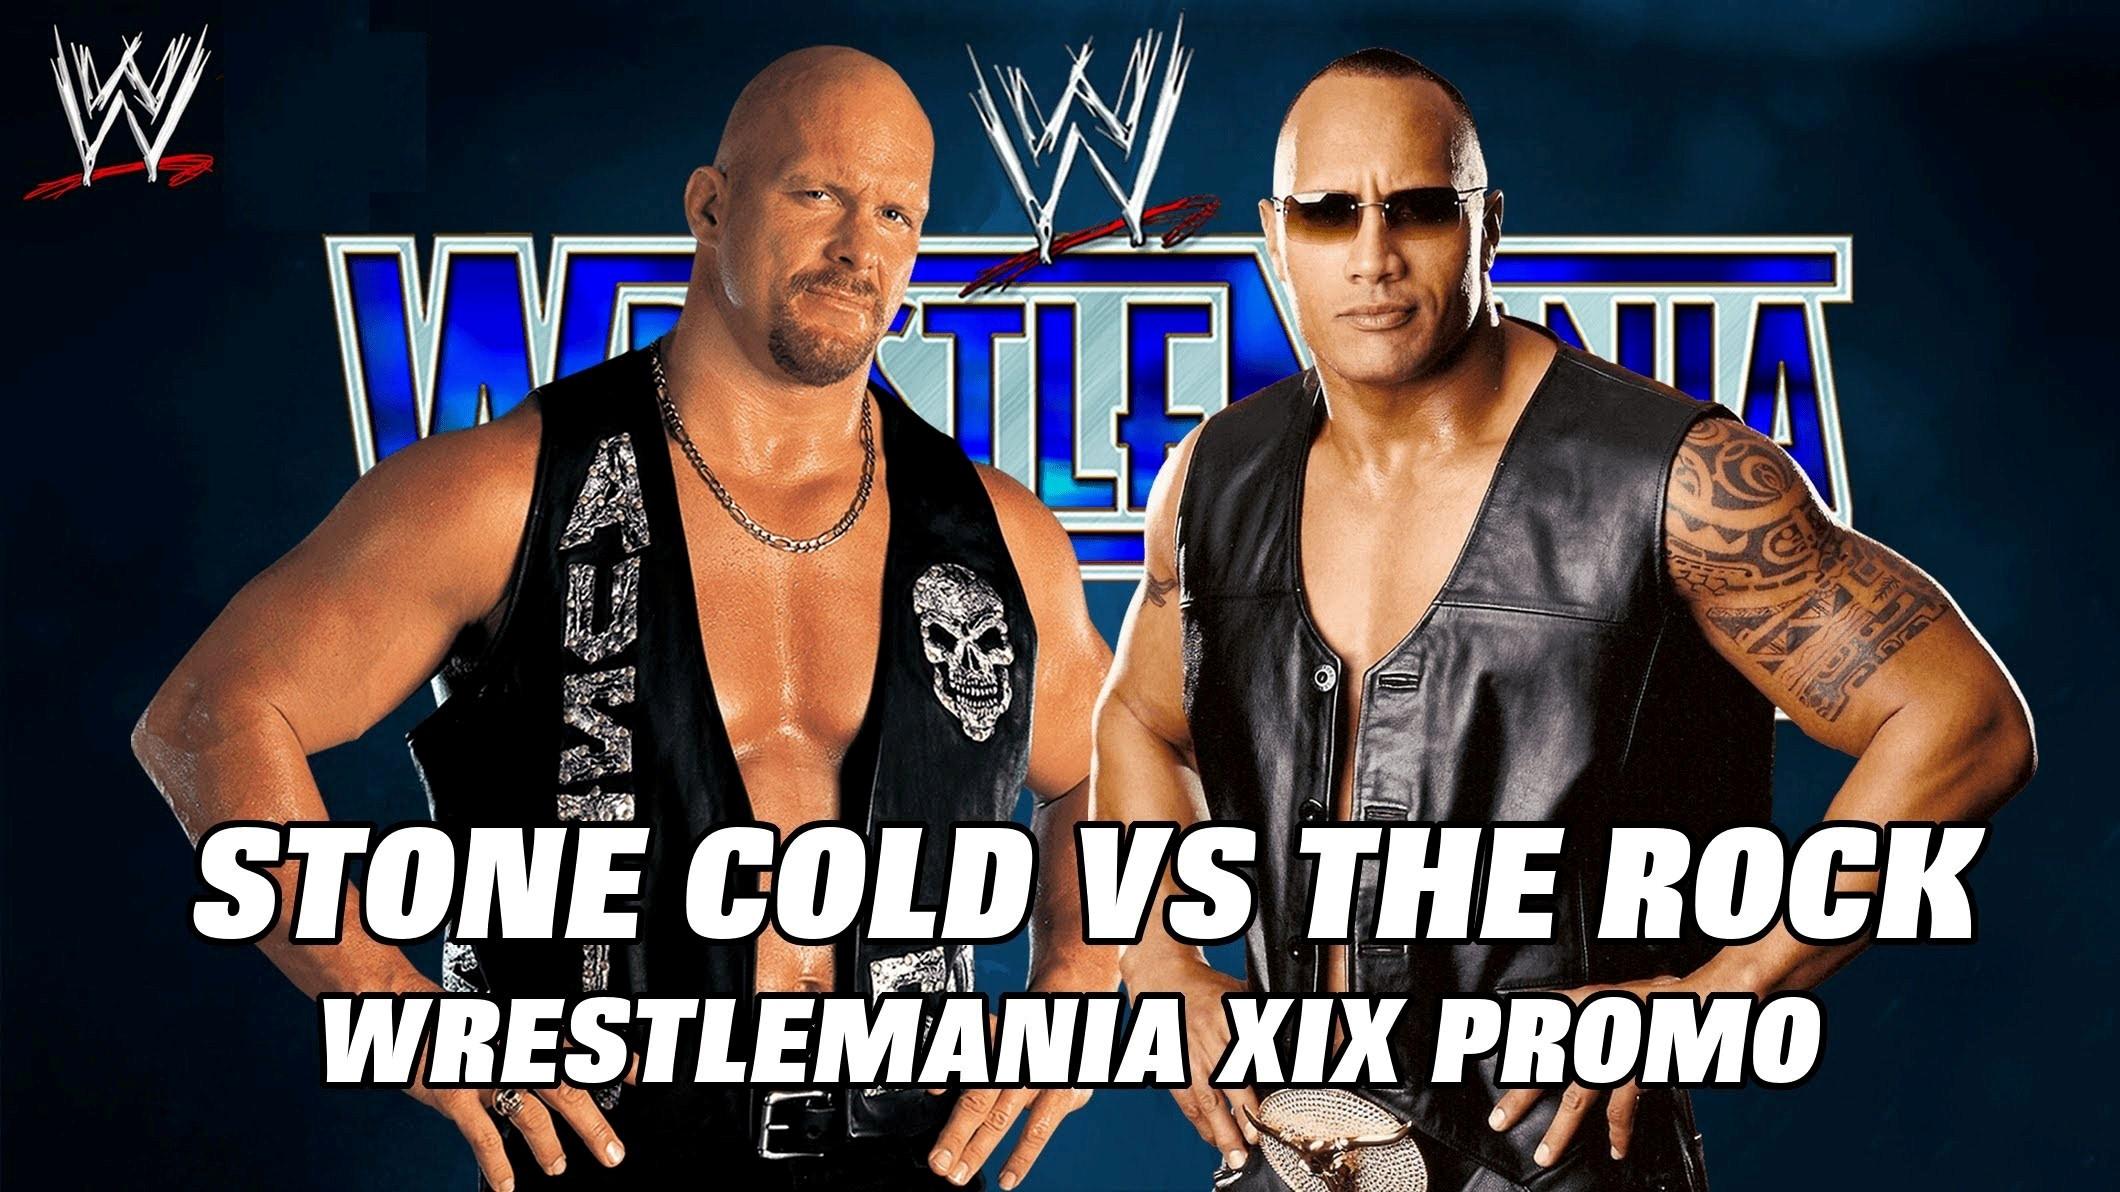 Stone Cold Steve Austin vs The Rock Promo at Wrestlemania xix. HD